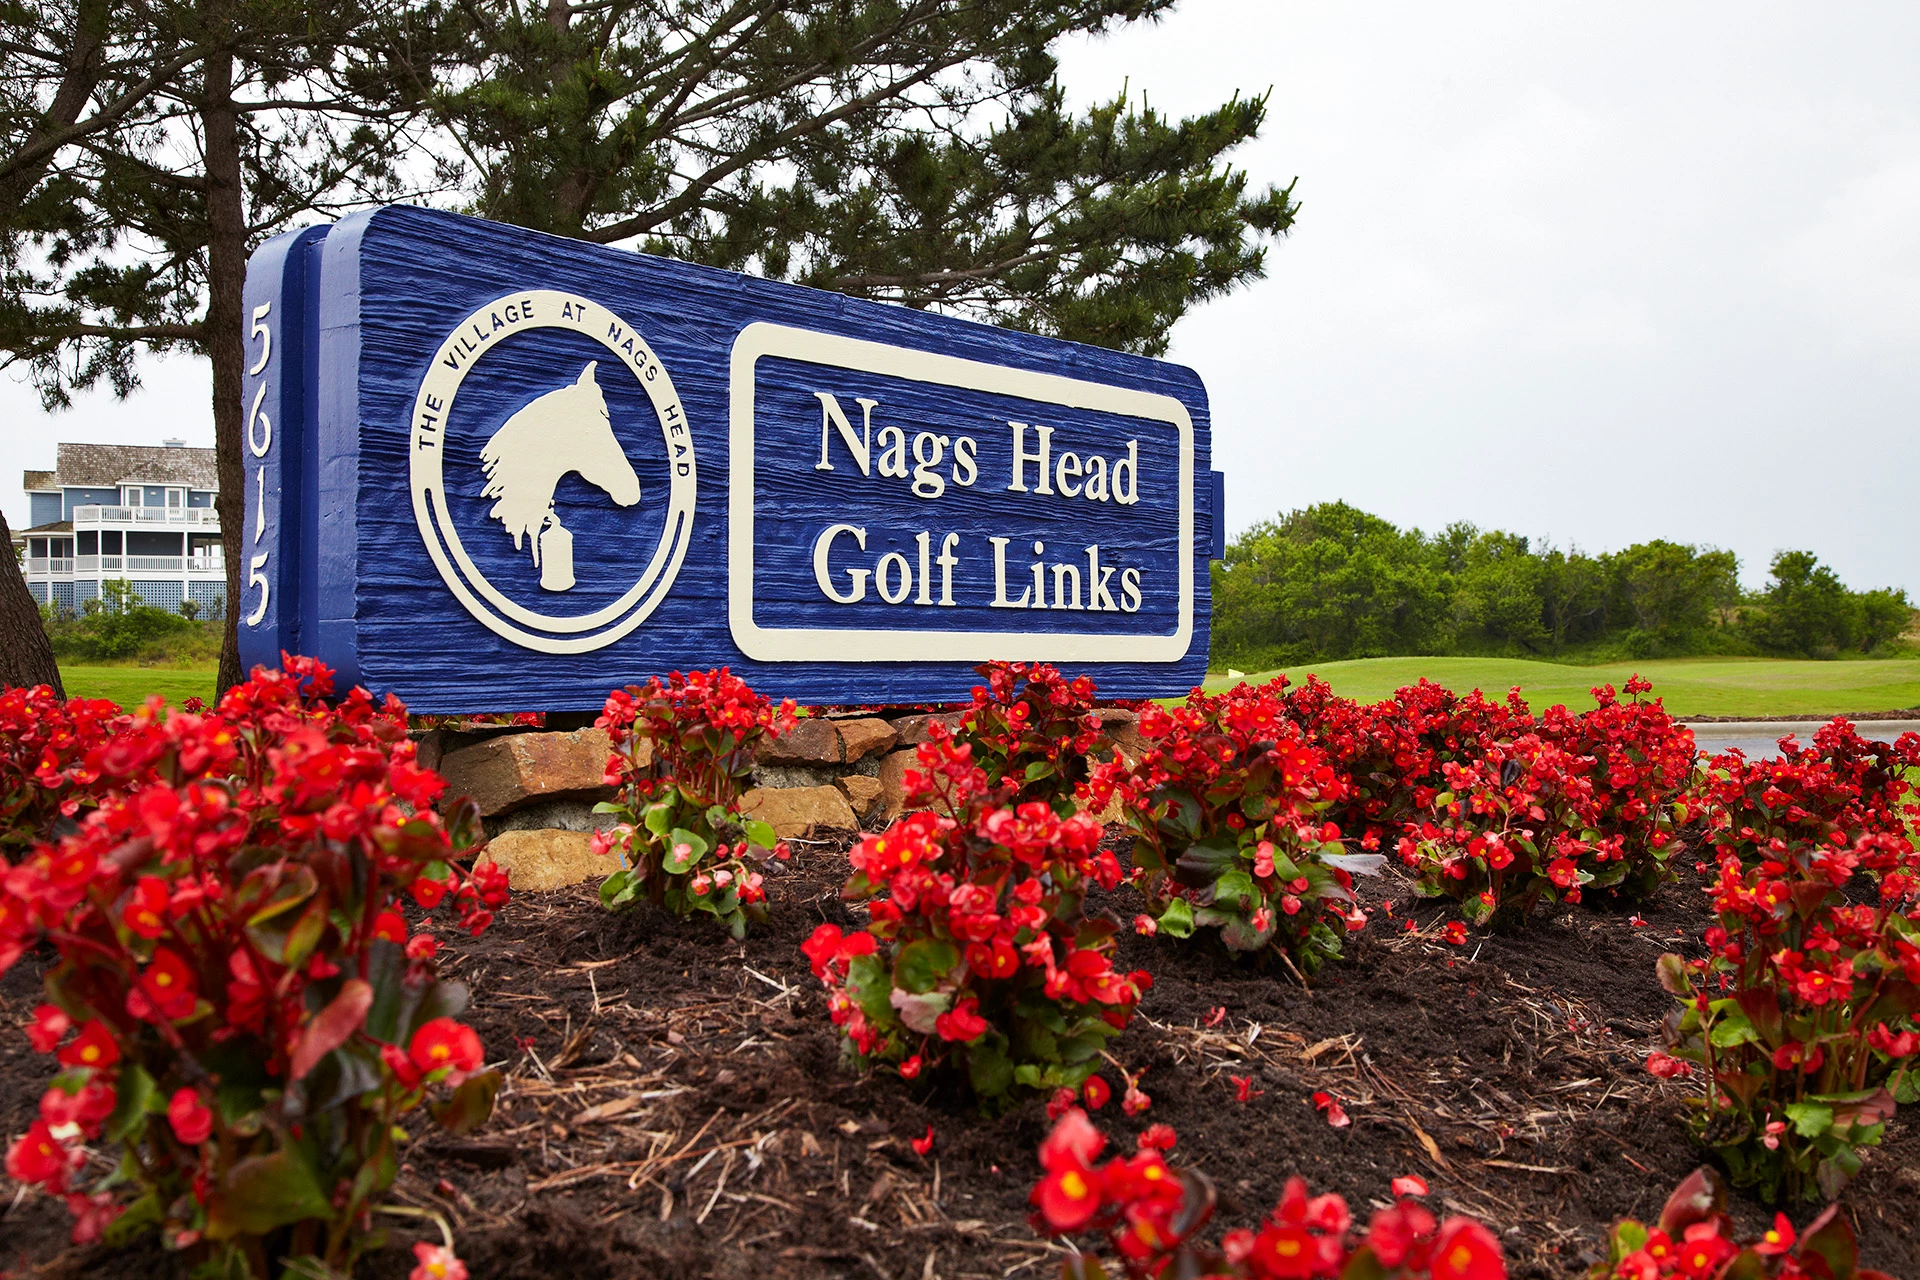 Nags Head Golf Links - Sign